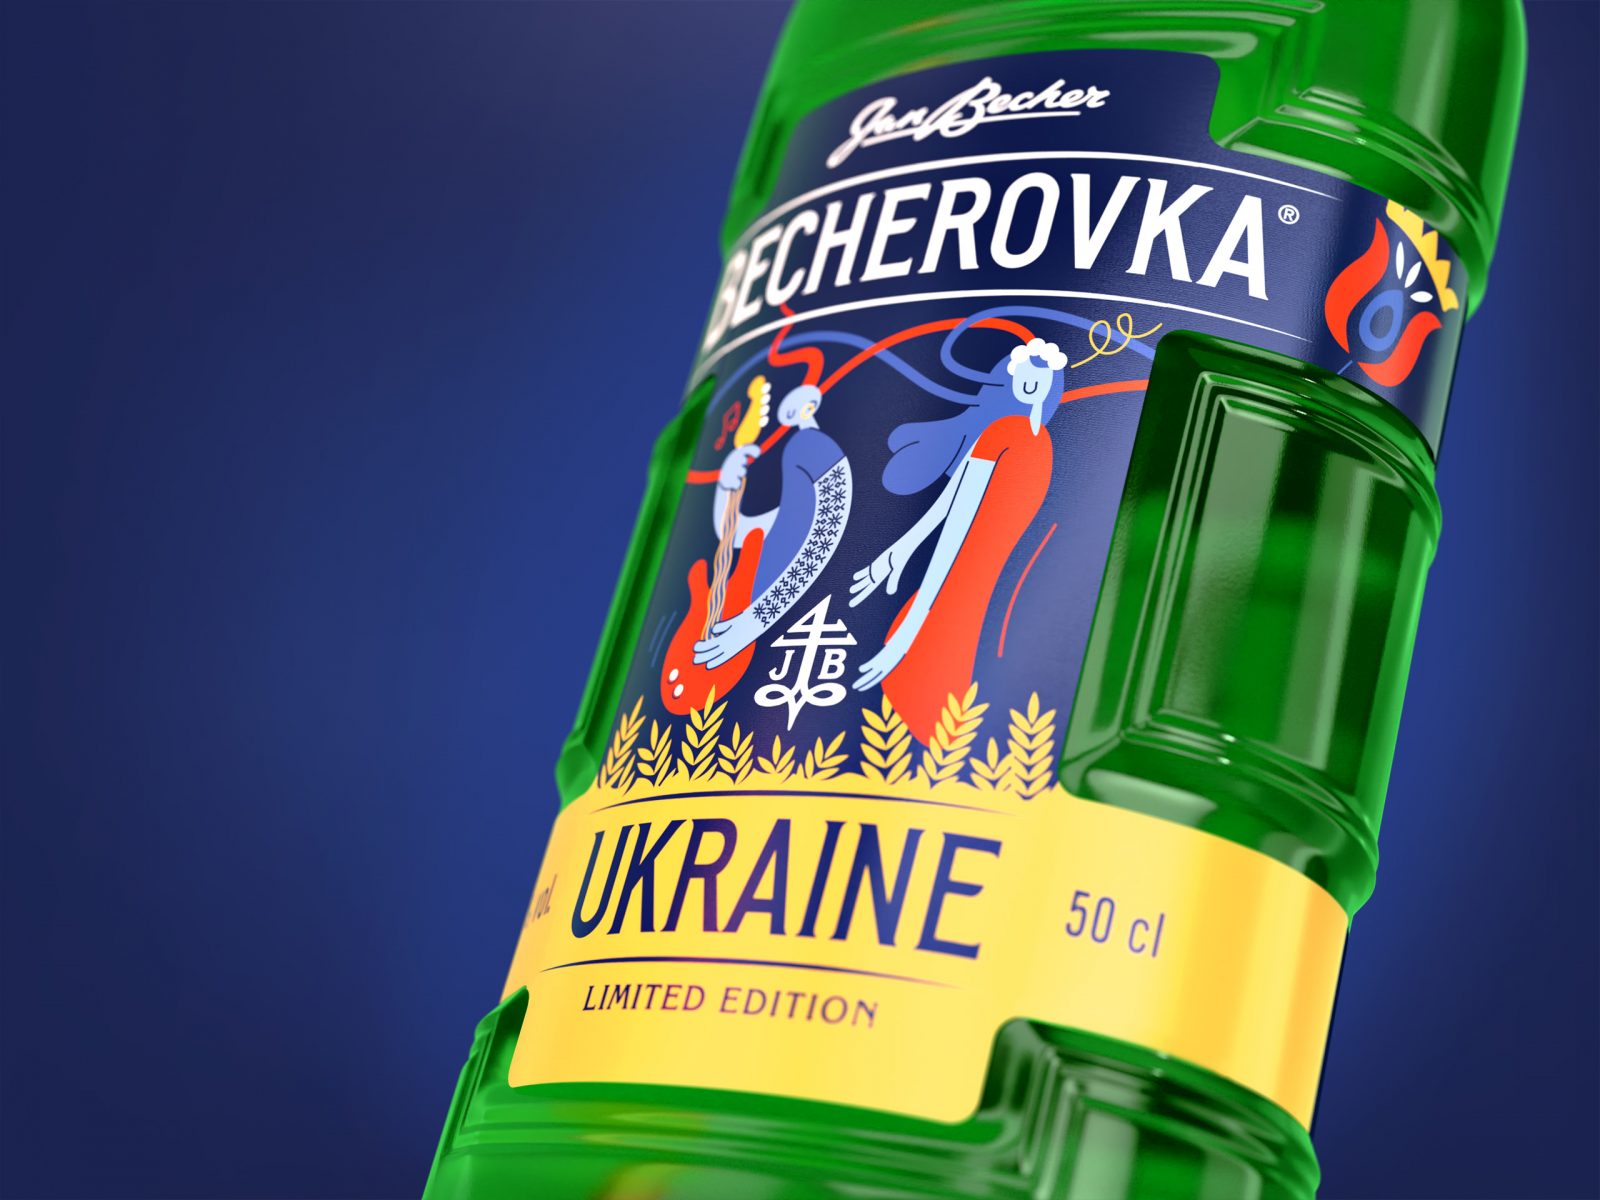 Becherovka Ukraine Limited Edition Packaging Design by Cocoon Prague